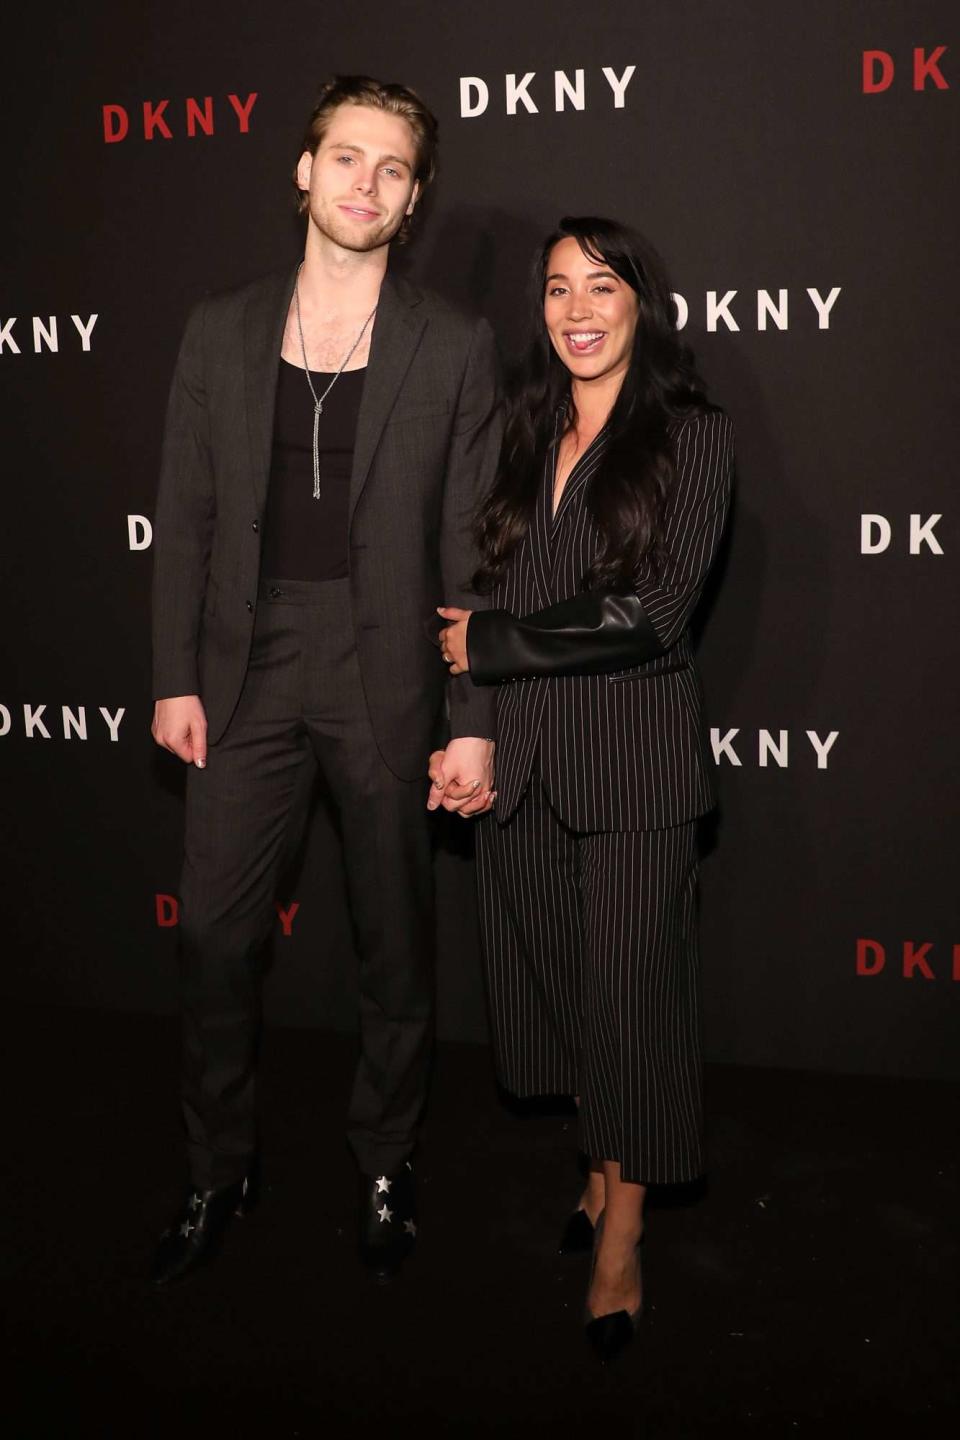 Luke Hemmings and Sierra Deaton Attend a DKNY Event